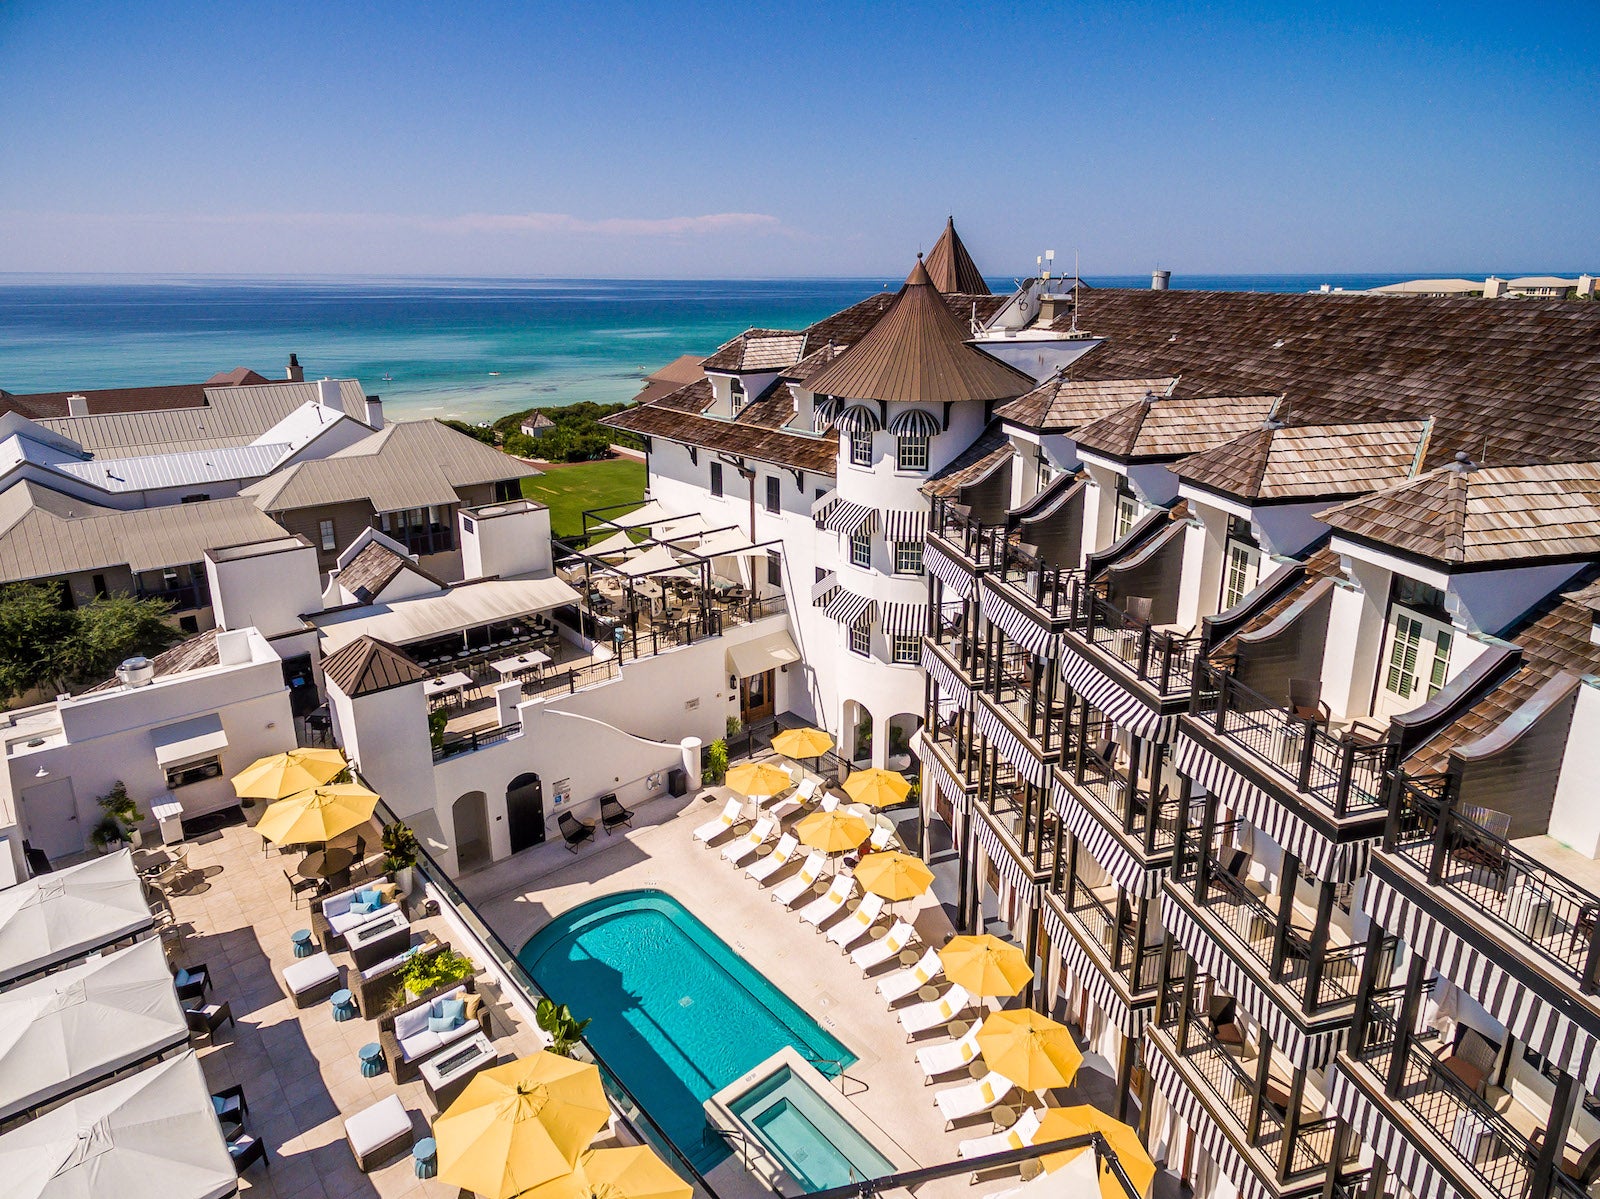 Aerial view of The Pearl hotel in Santa Rosa Beach, FL